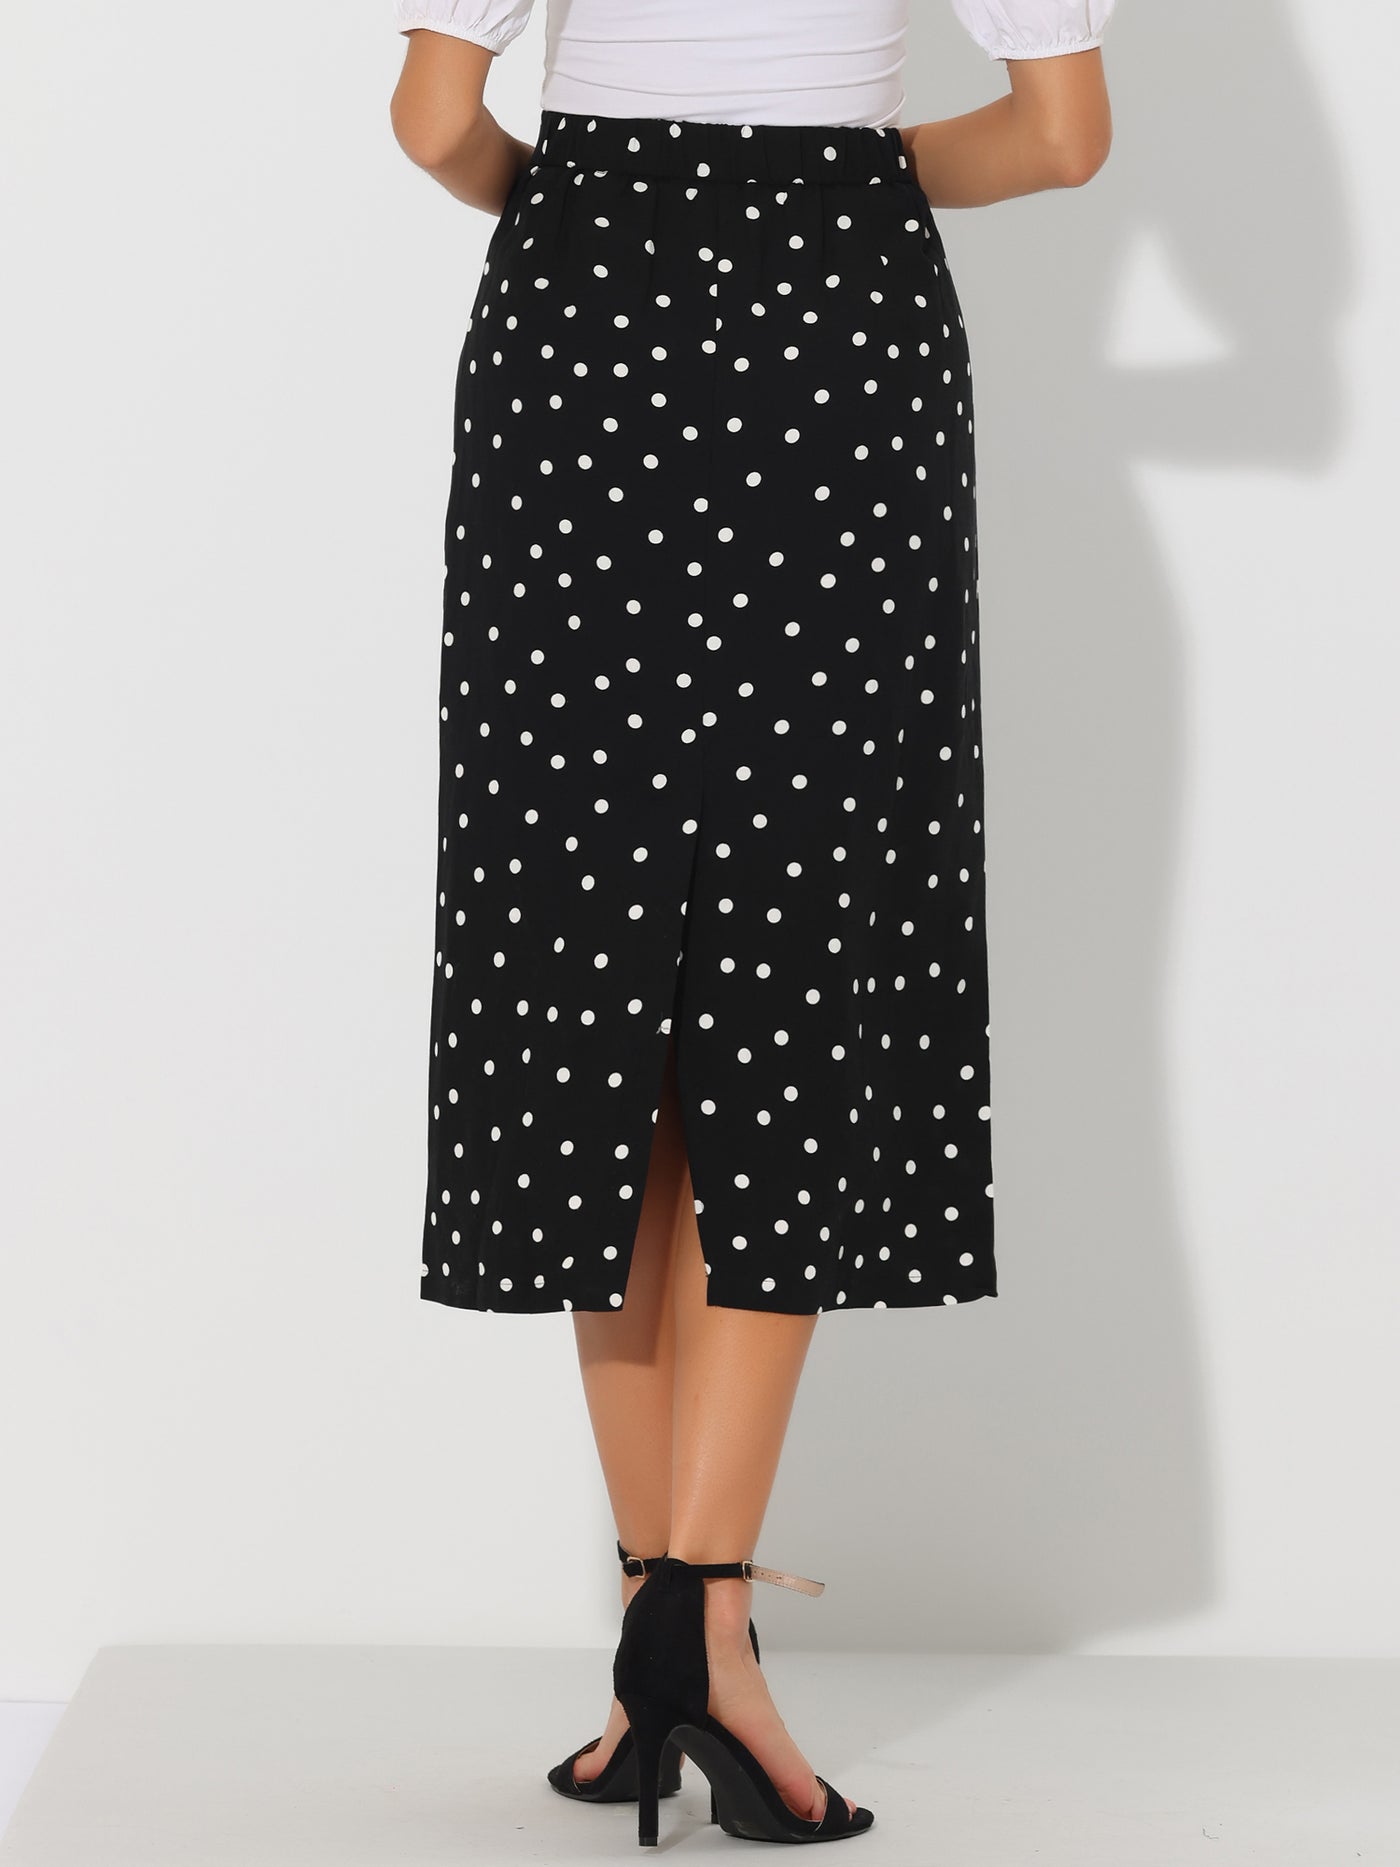 Allegra K Women's Summer Polka Dots Skirt Casual Elastic High Waisted Pencil Midi Skirt